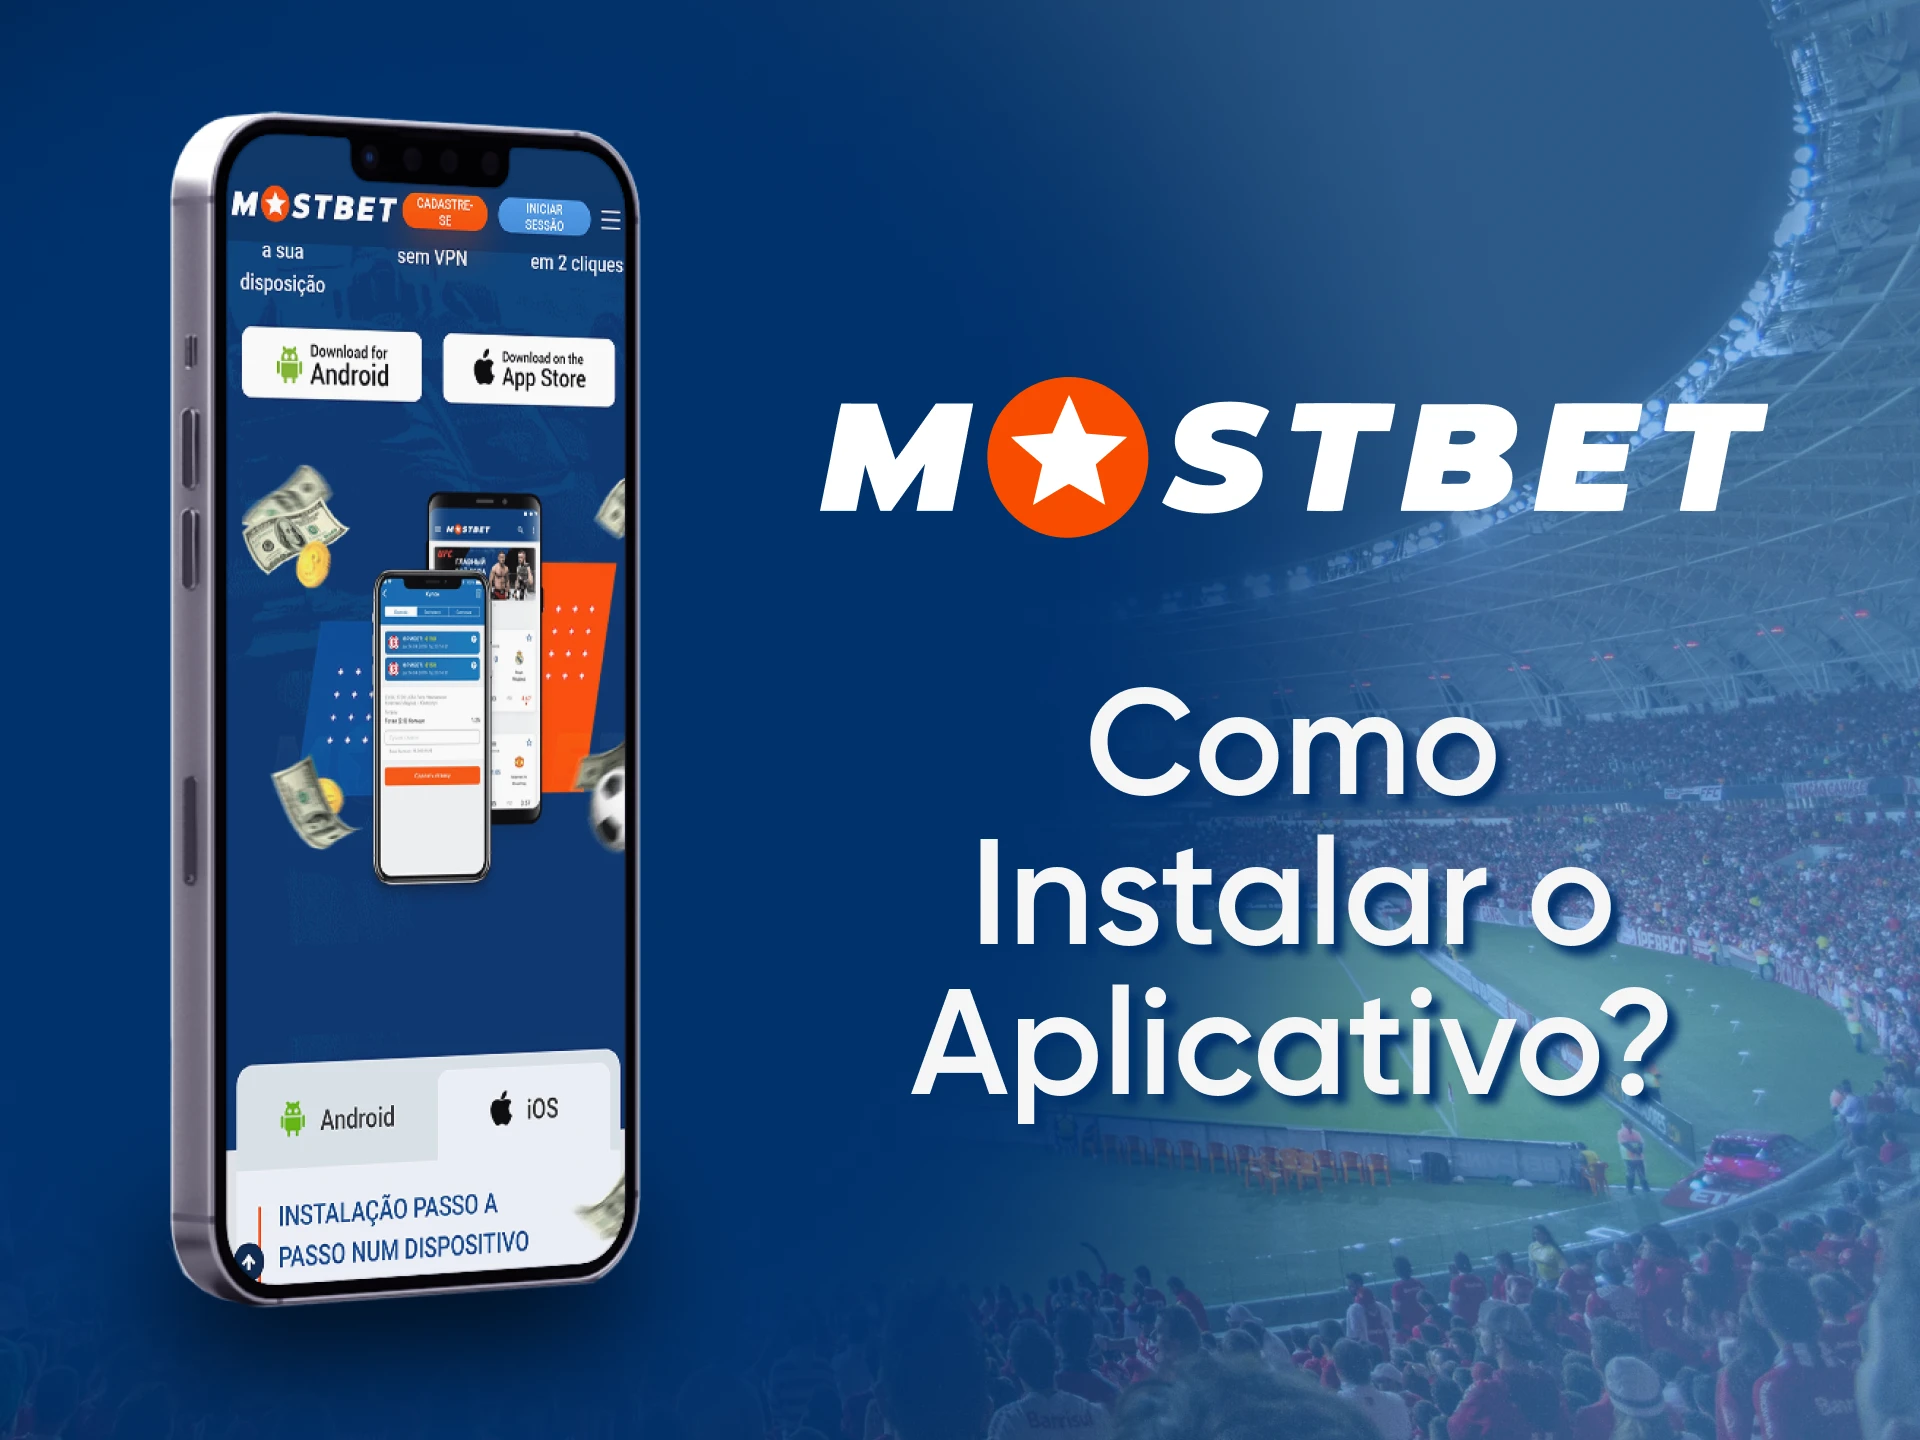 Use este guia para baixar e instalar o aplicativo Mostbet para o seu dispositivo.